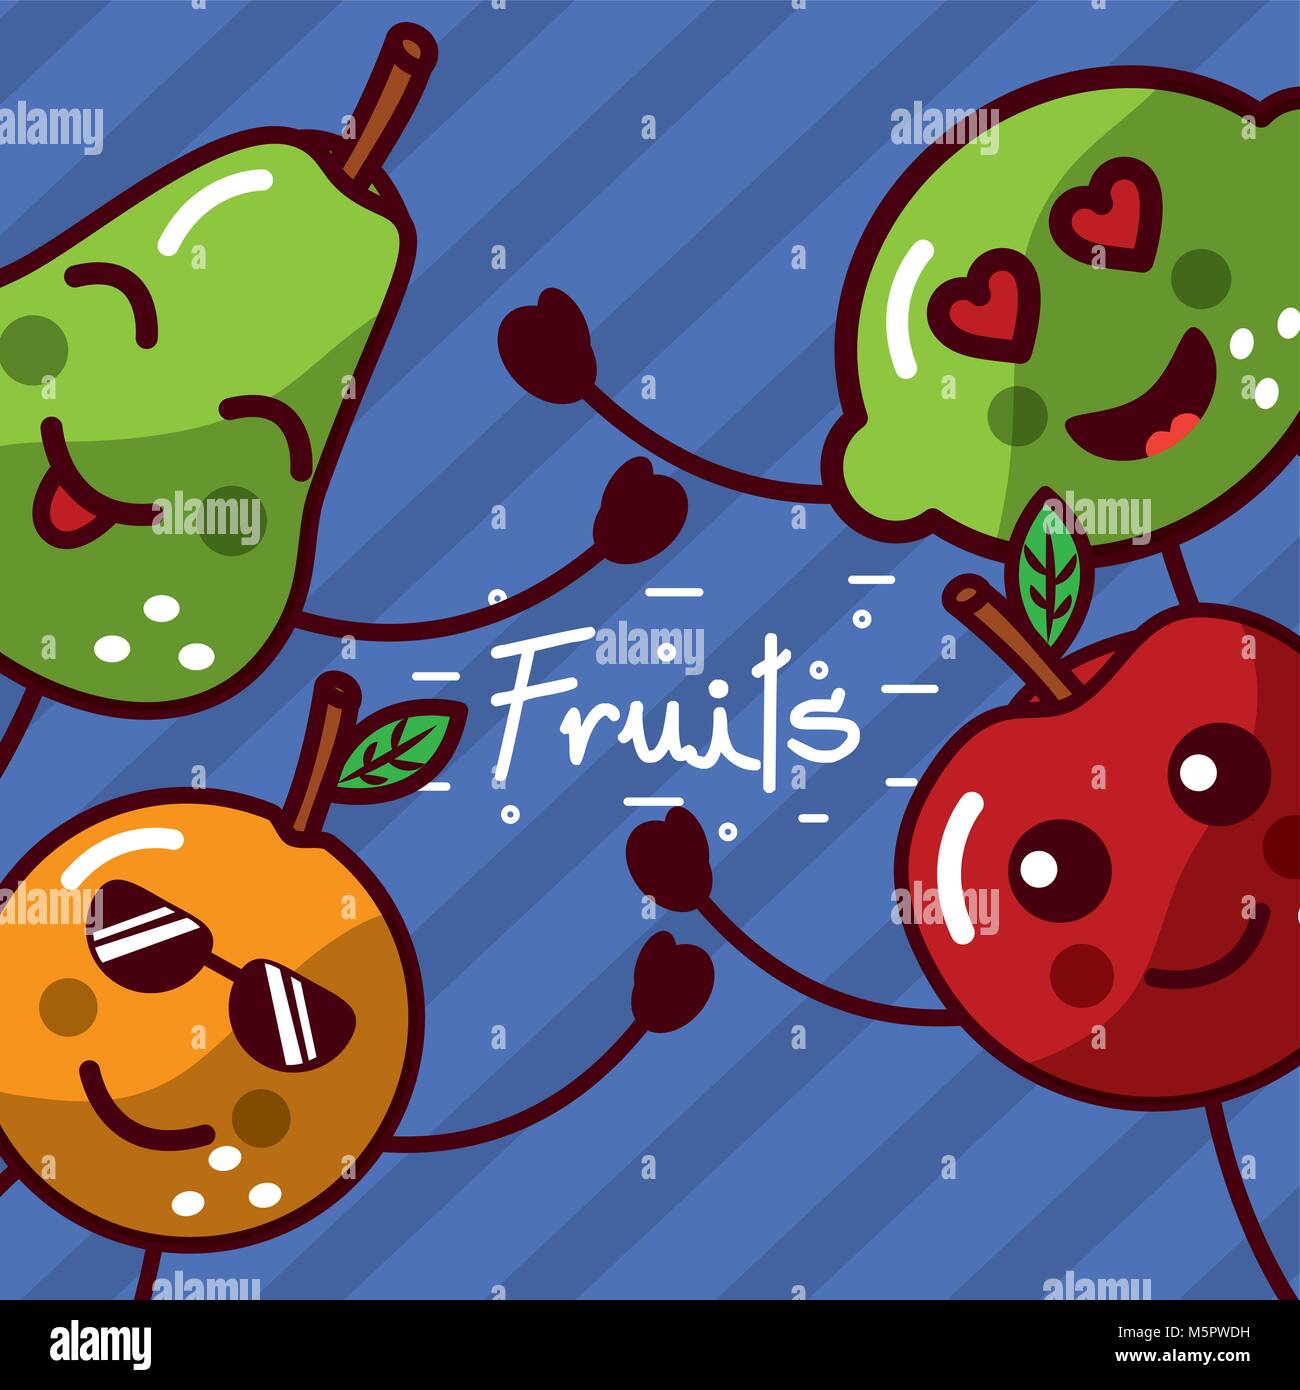 Kawaii smiling cartoon fruits poster Image Vectorielle Stock - Alamy